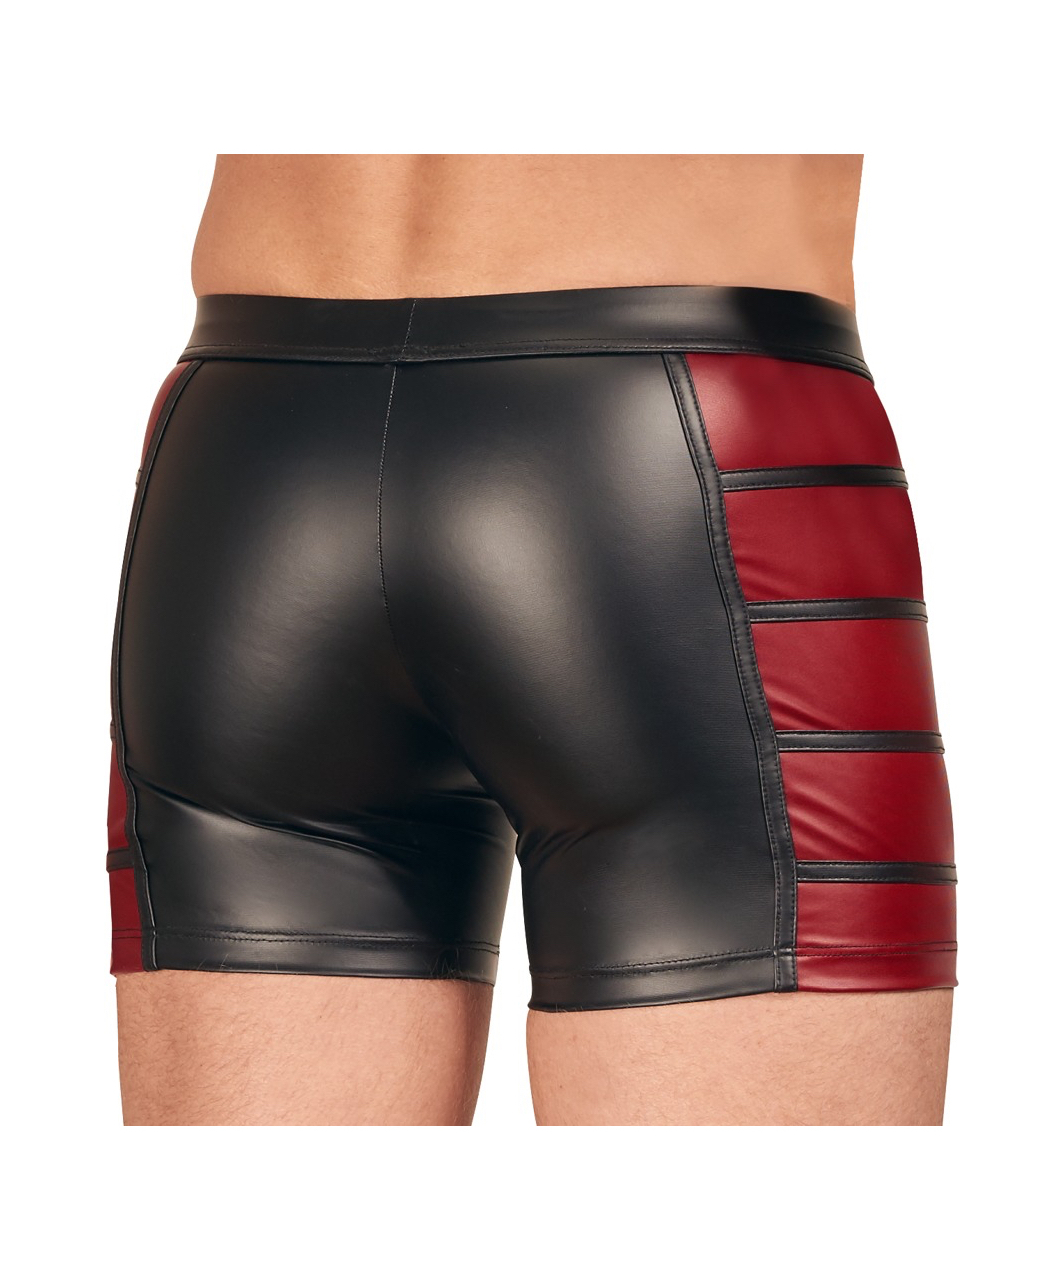 NEK black & red matte look boxer briefs